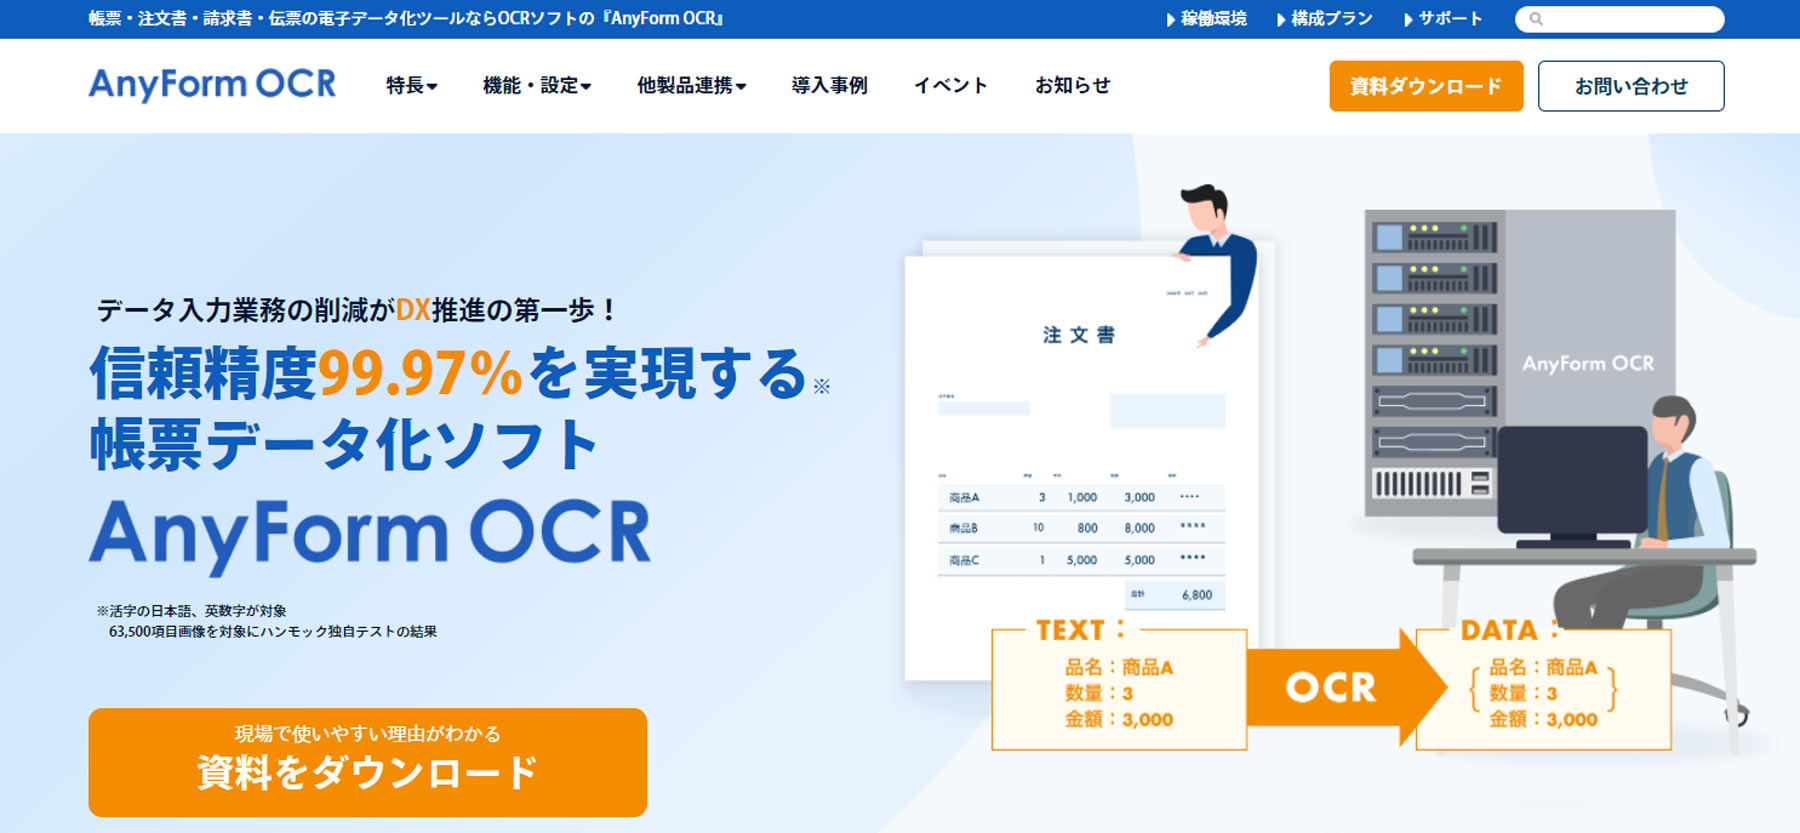 AnyForm OCR公式Webサイト